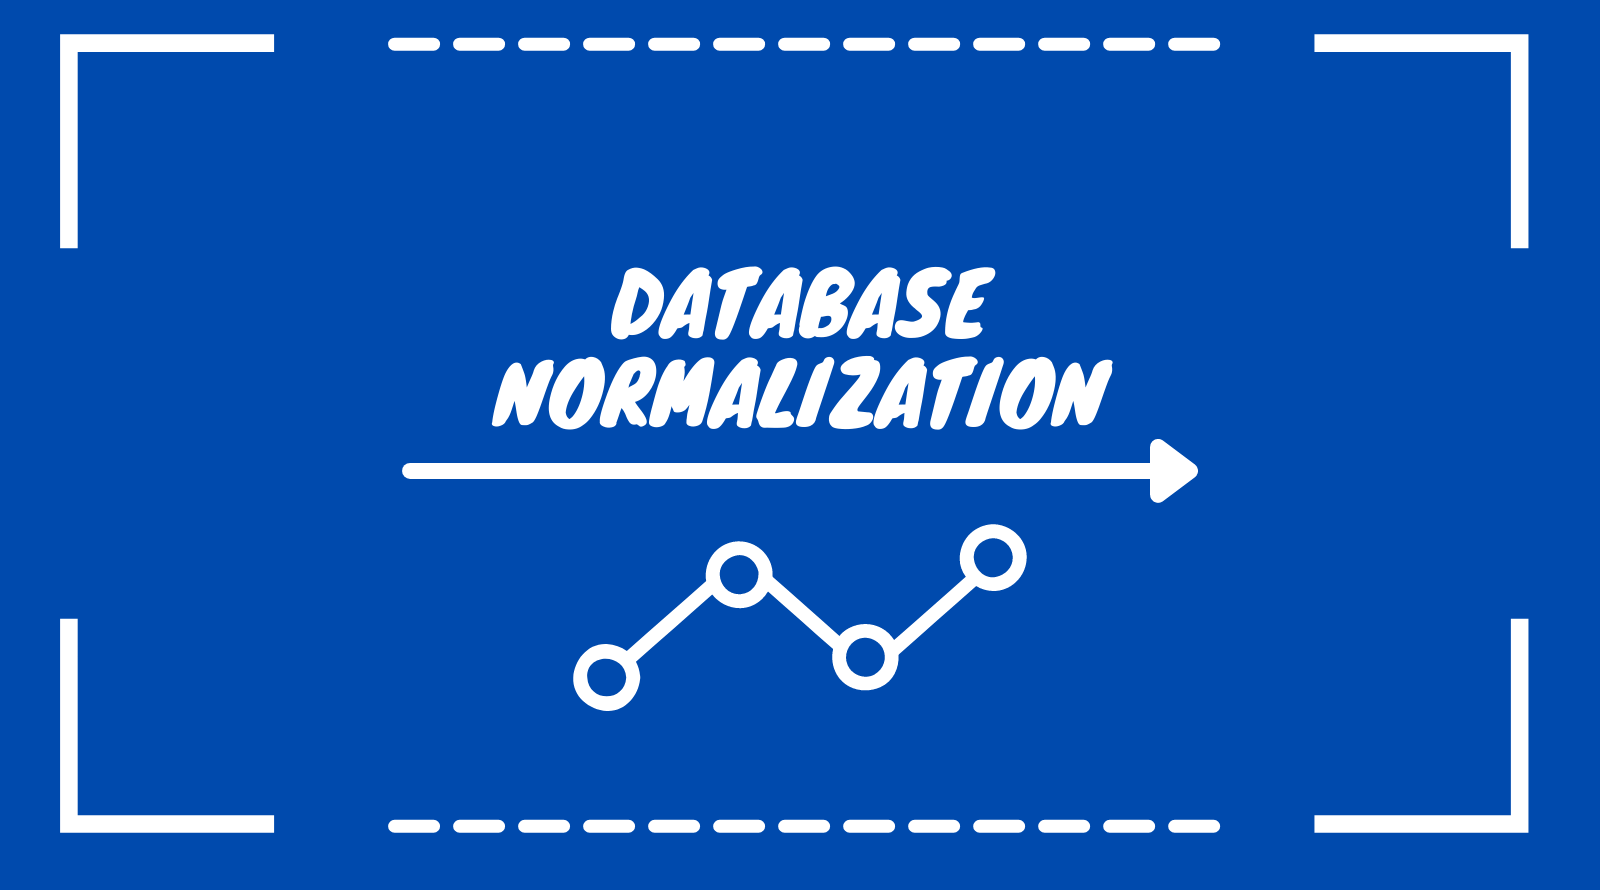 Database Normalization and Database Security